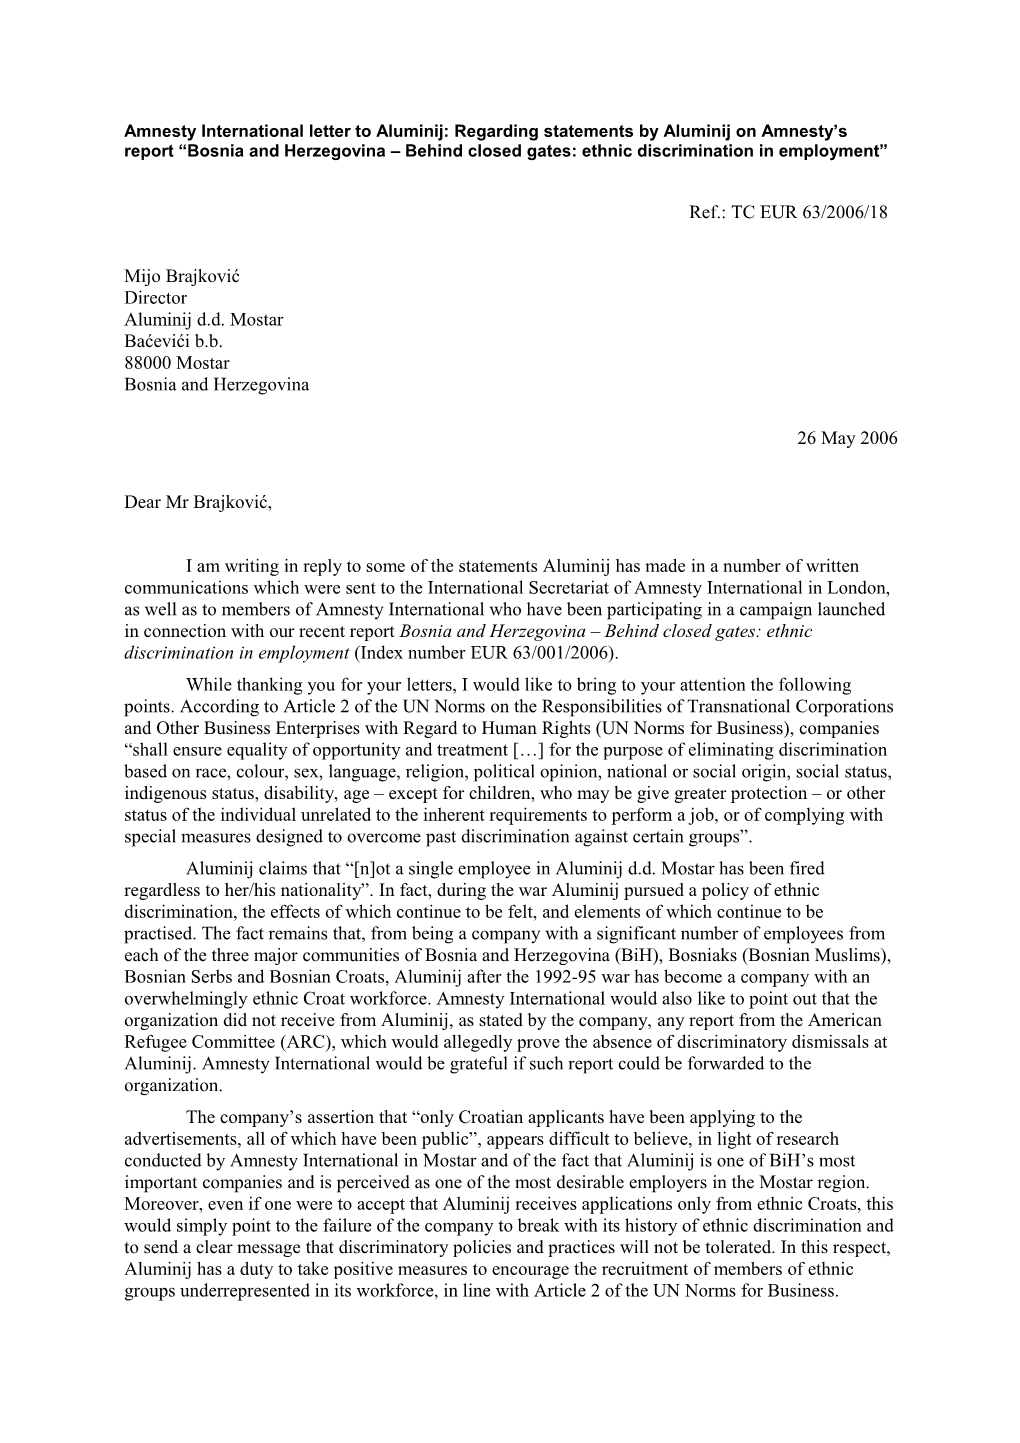 Amnesty International Letter to Aluminij: Regarding Statements by Aluminij on Amnesty